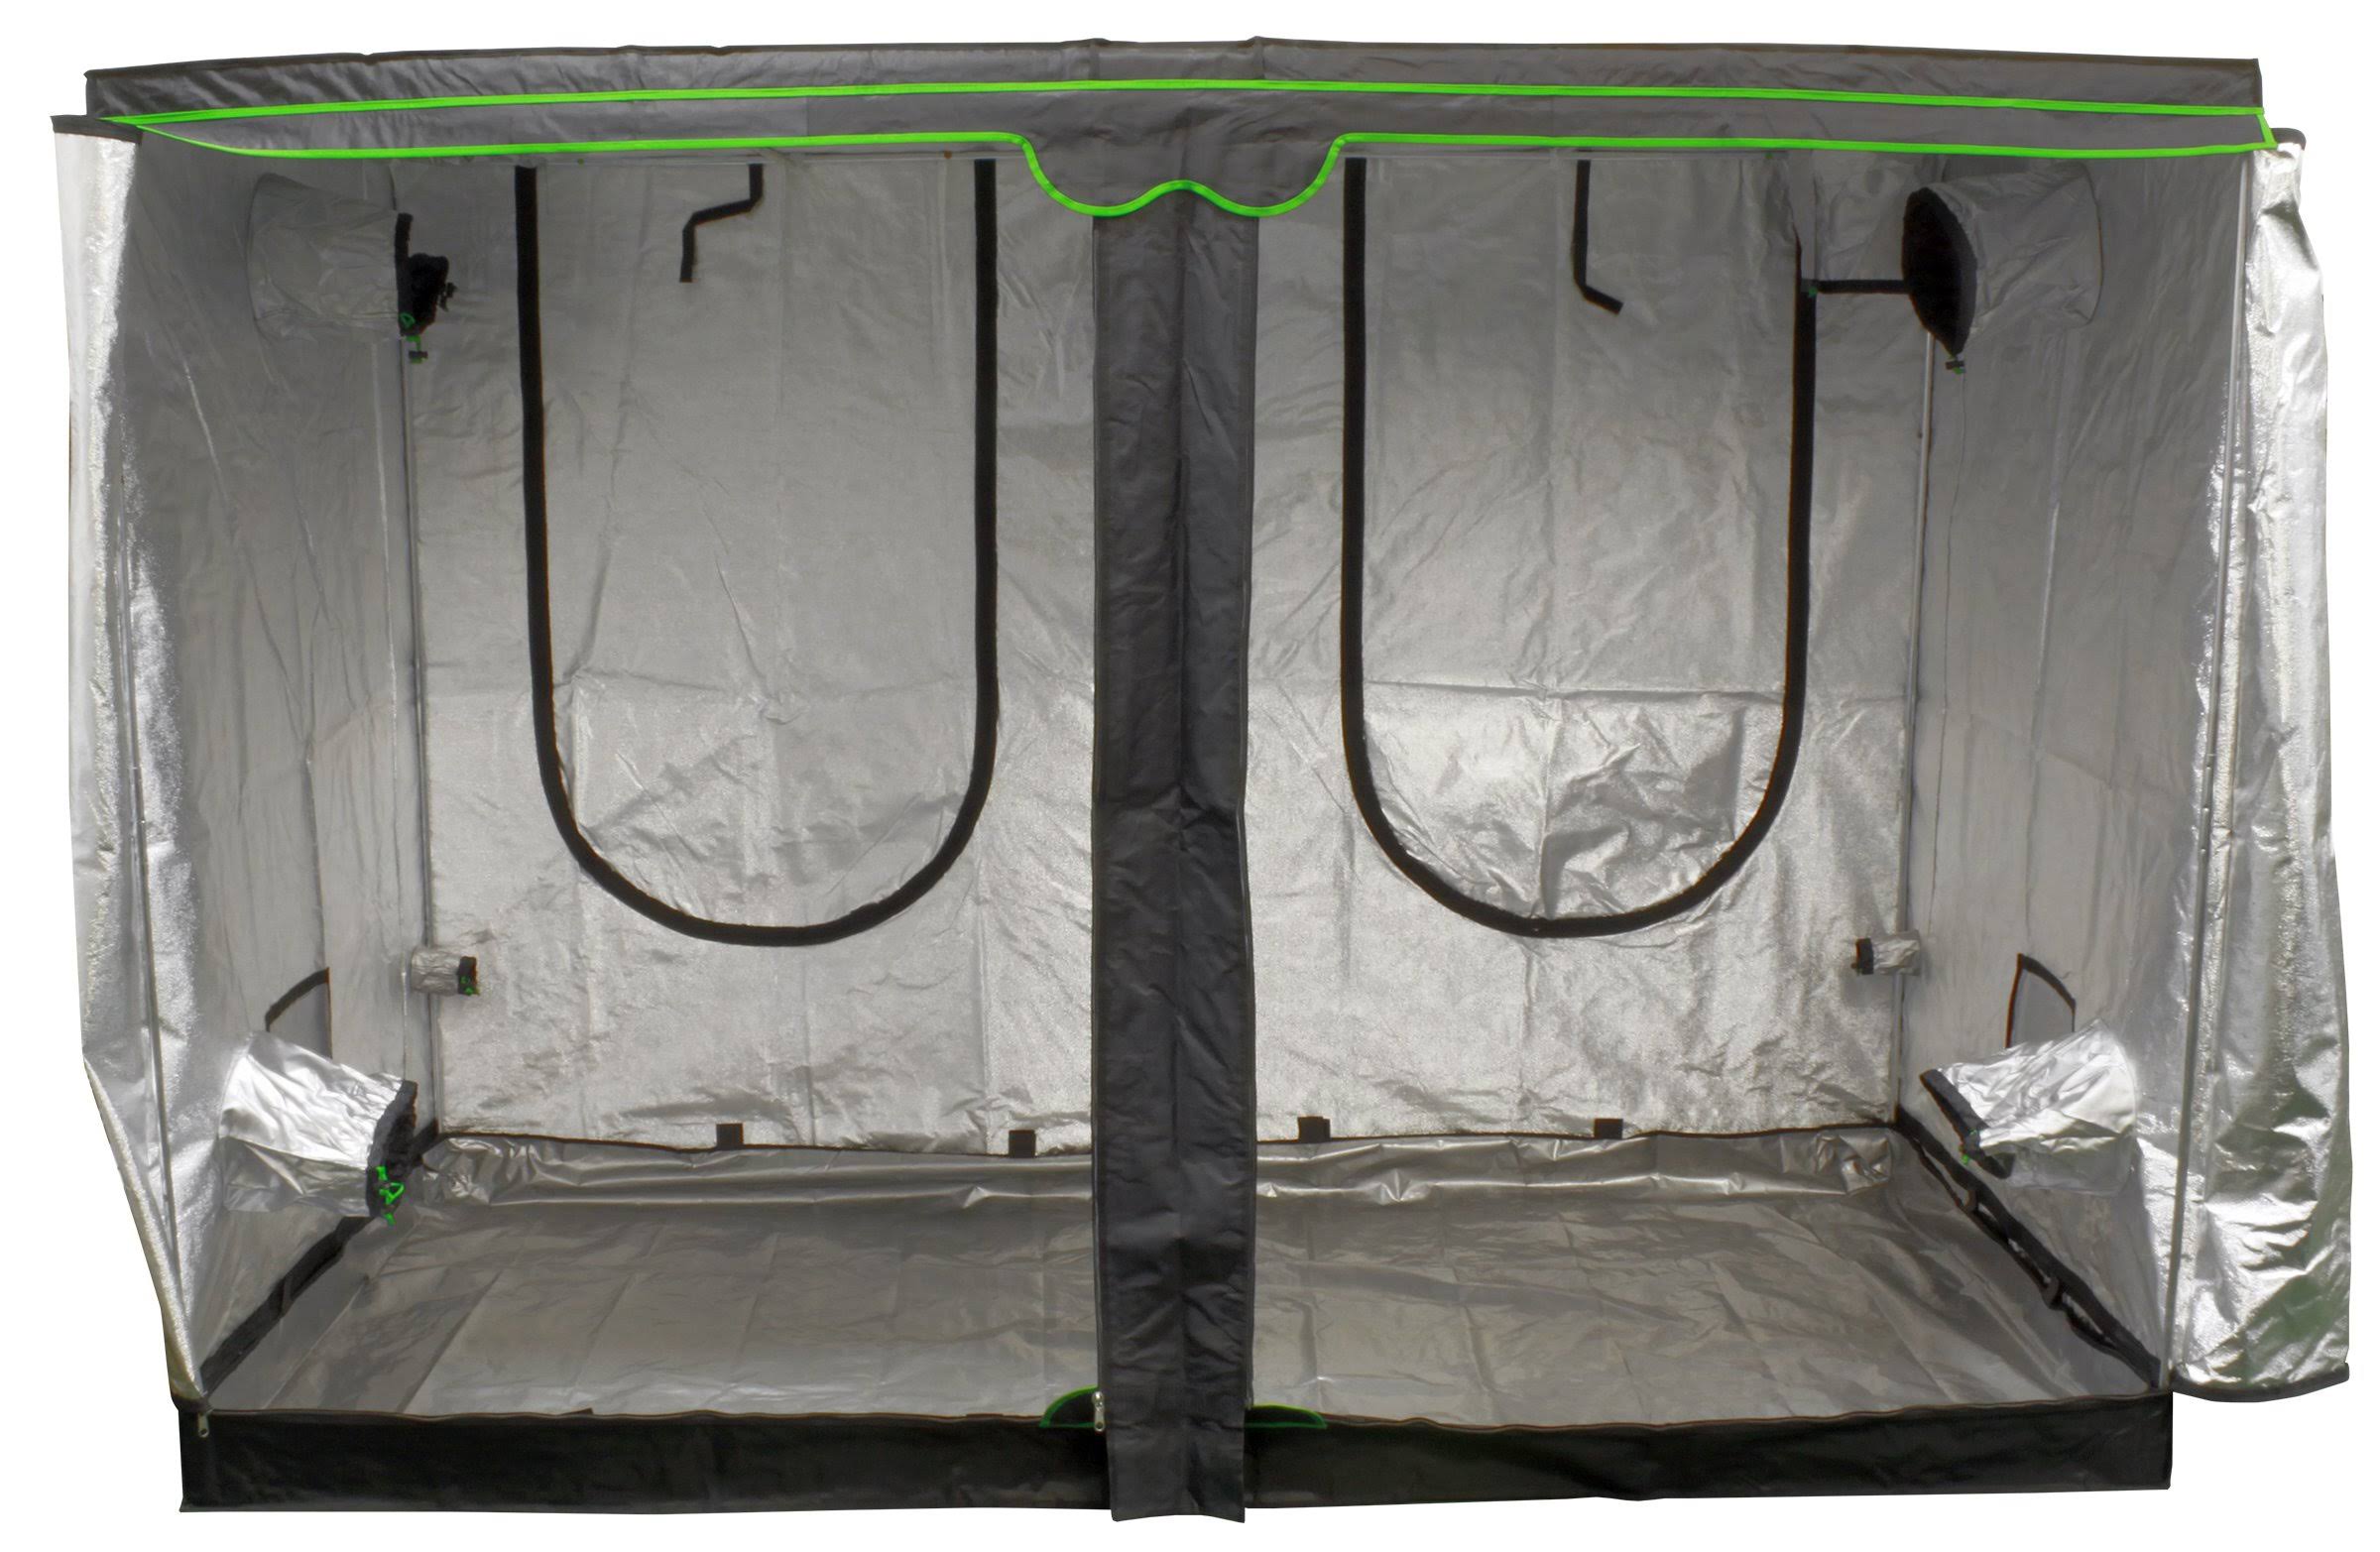 Sun Hut Big Easy Large Indoor Grow Tent - 9.4' x 4.7' x 6.5'